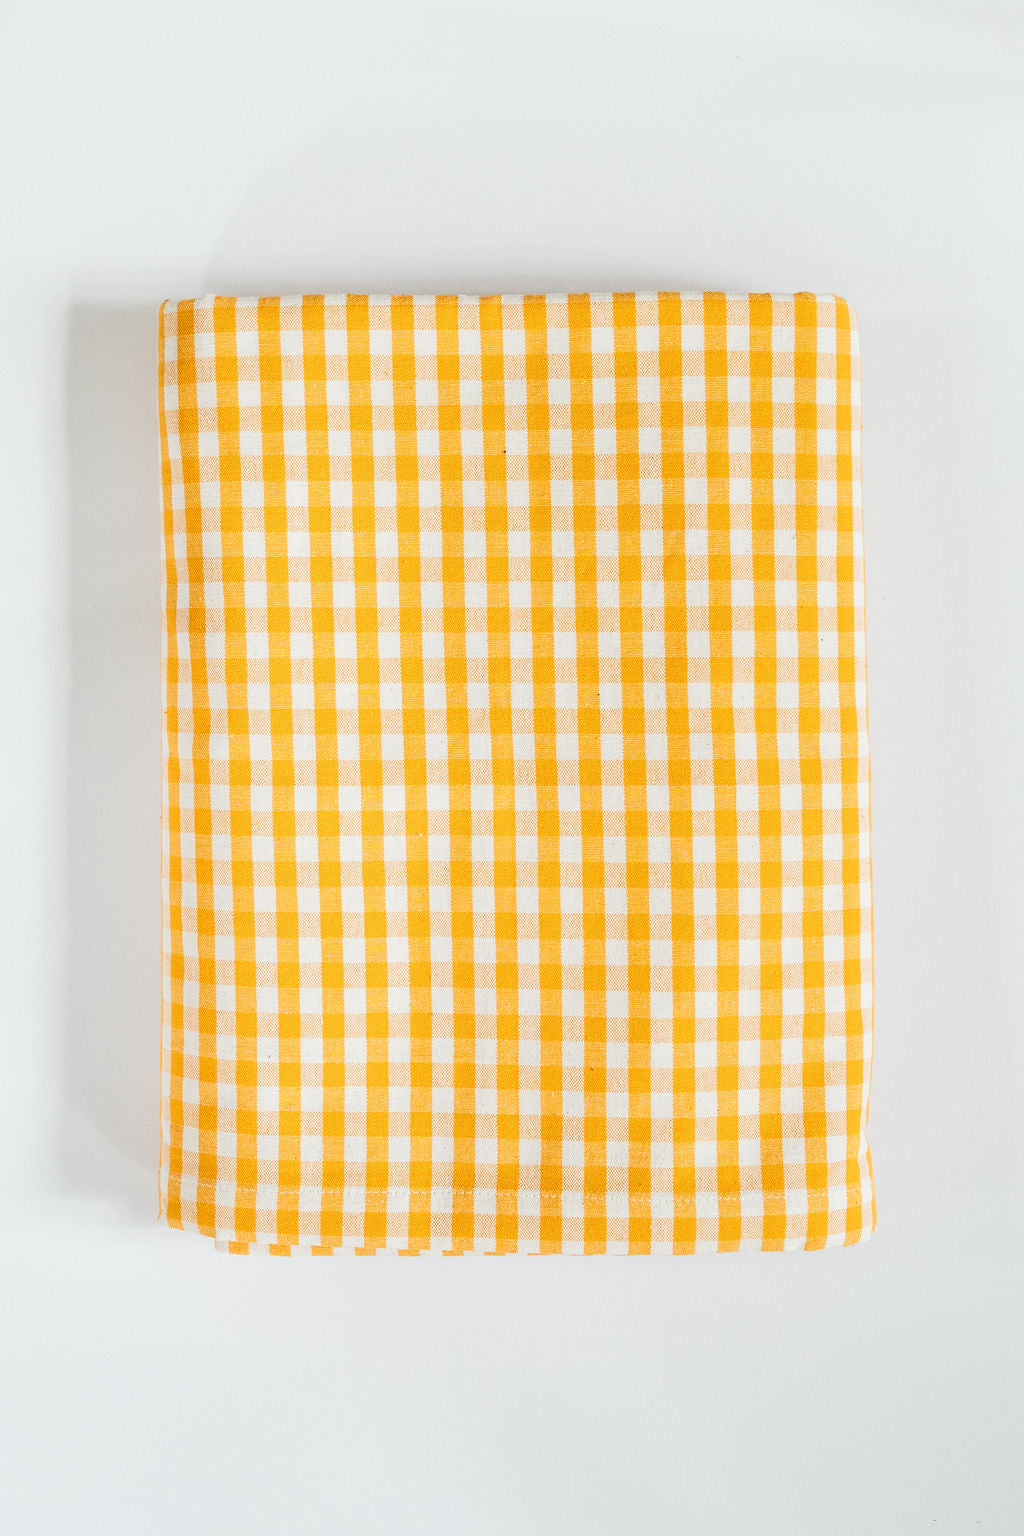 Gingham Check Yellow Table Cloth